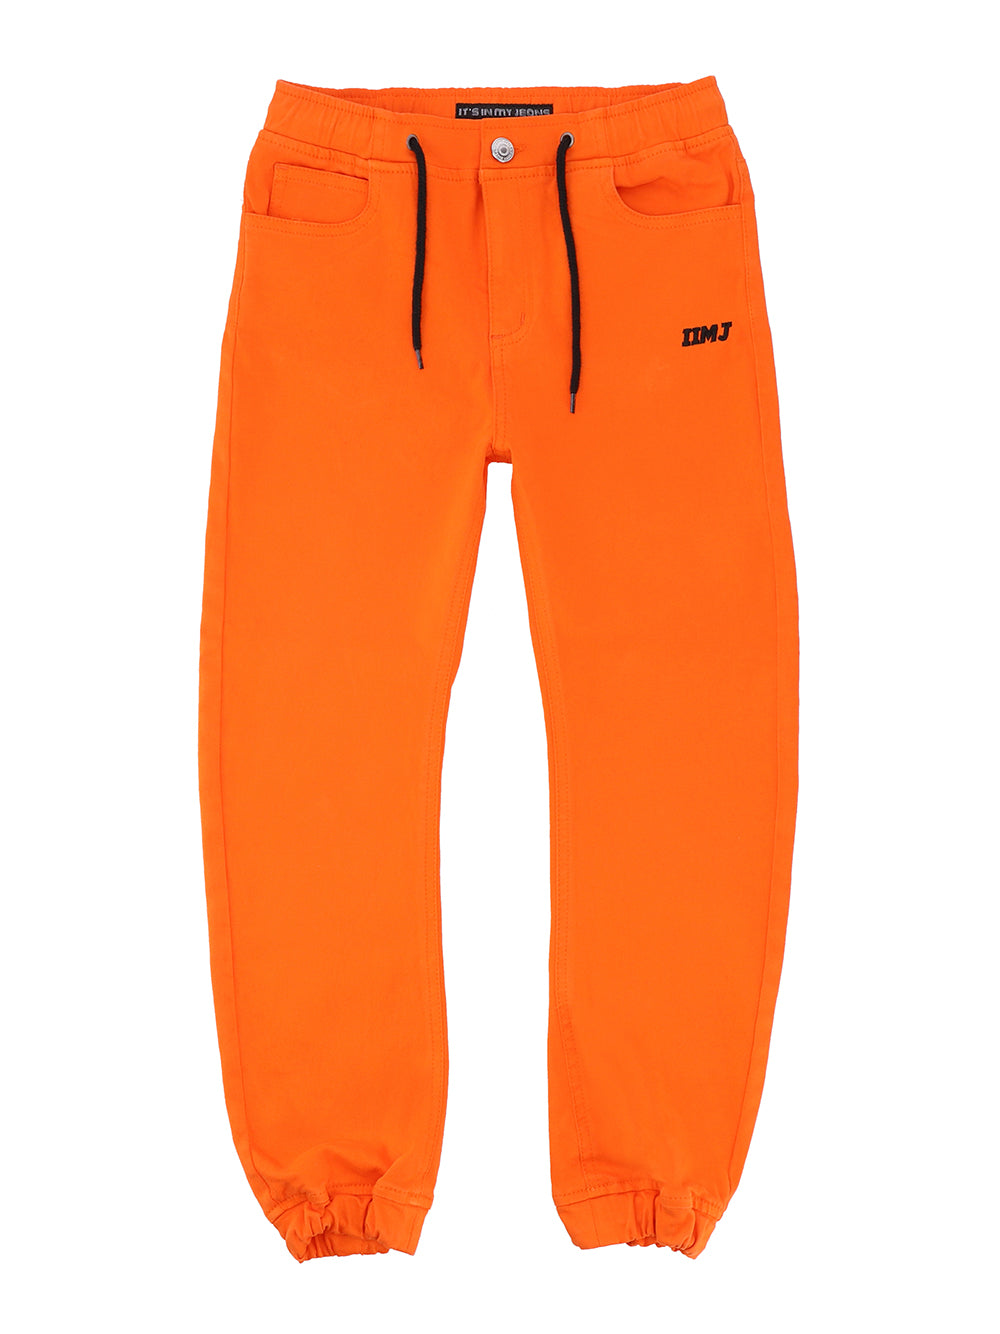 Tangerine Track Pants